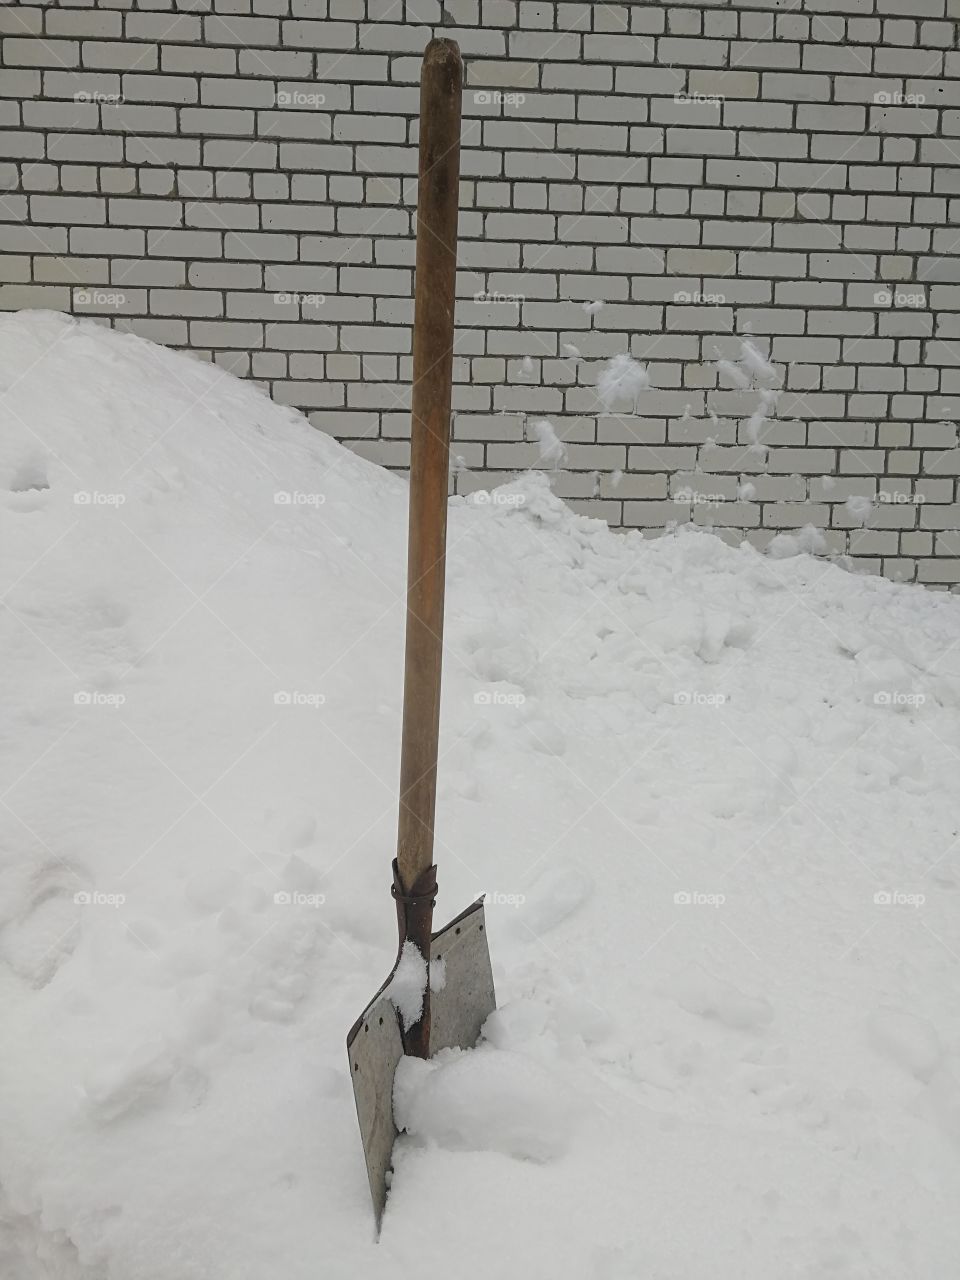 Shovel in the snow